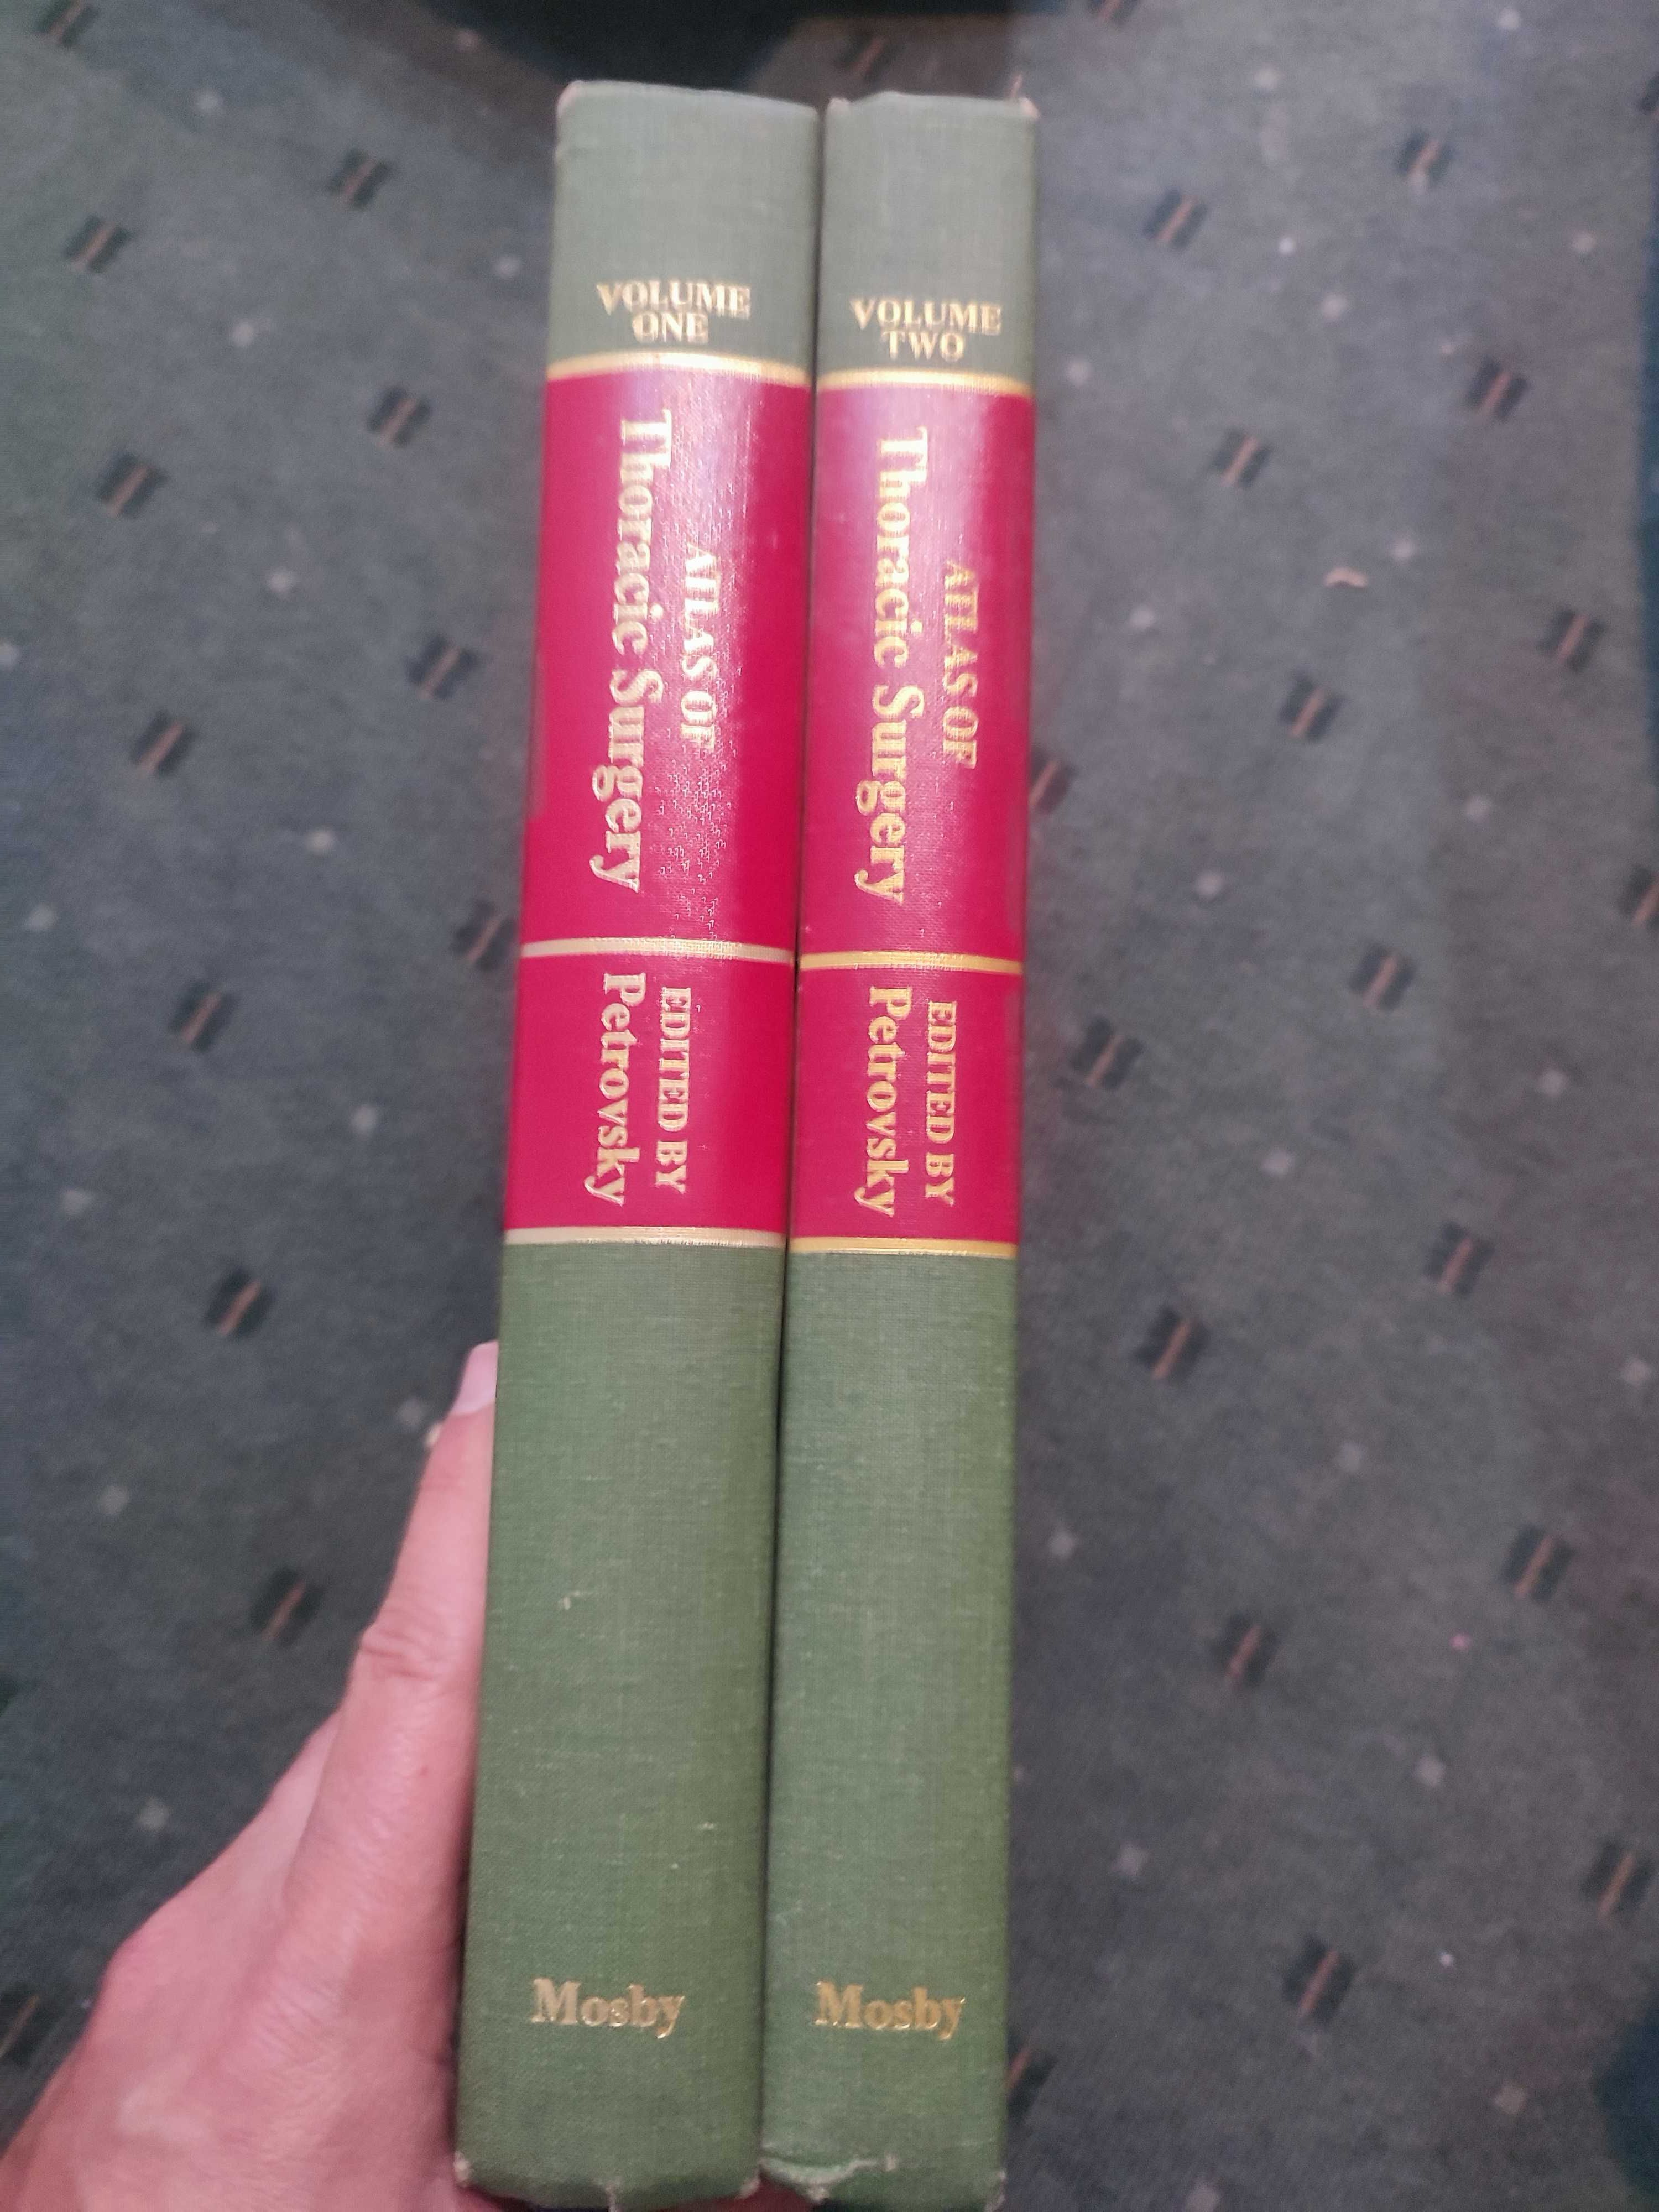 Atlas of Thoracic Surgery - Petrovsky - 2 volumes